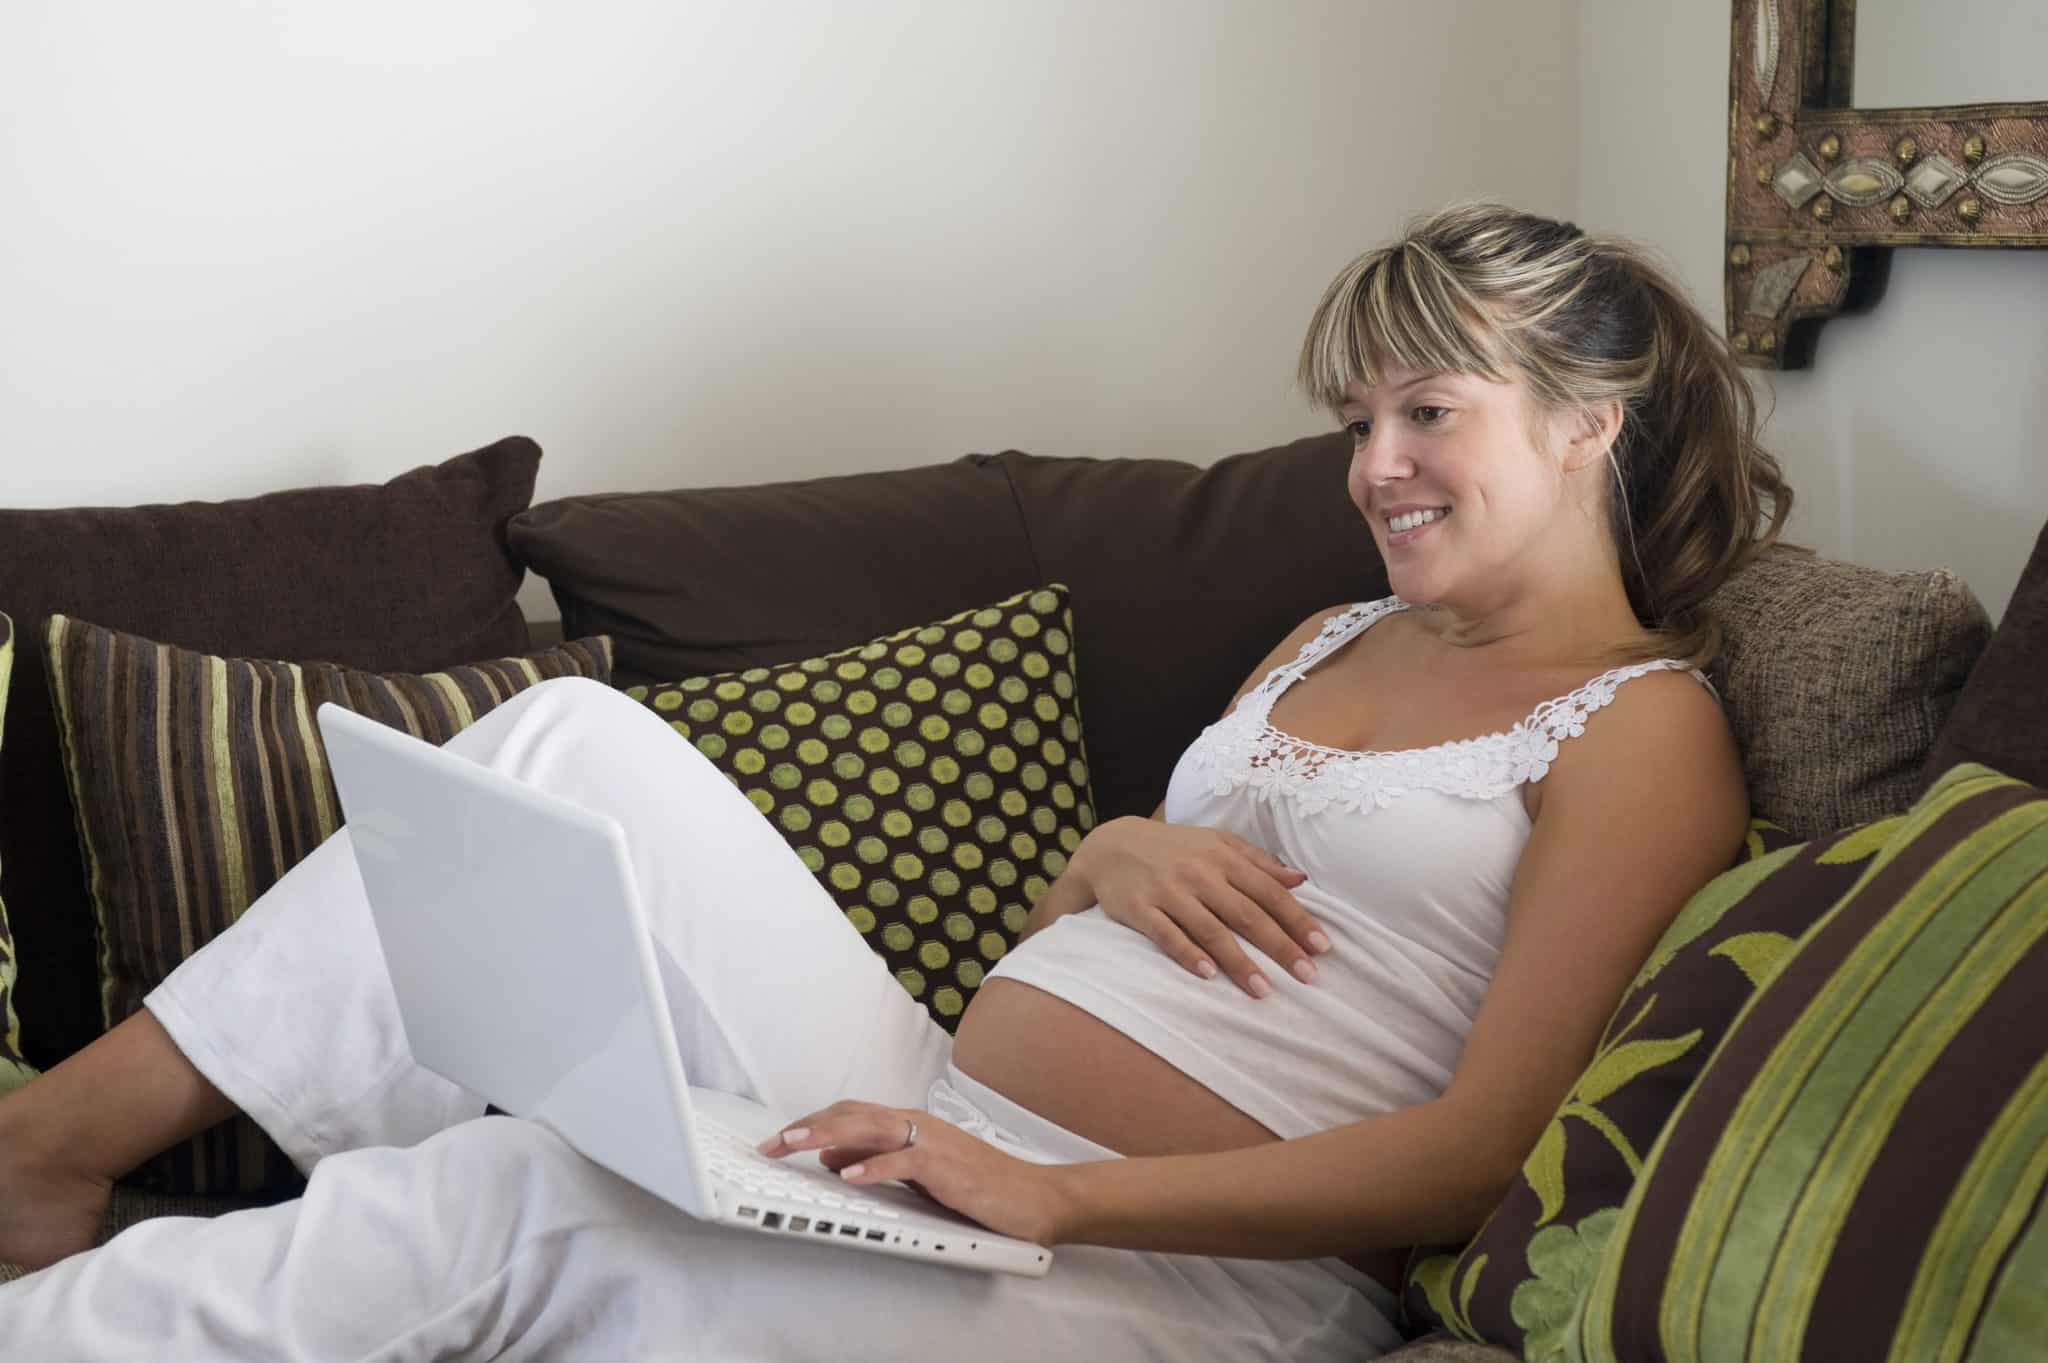 pregnant woman on laptop